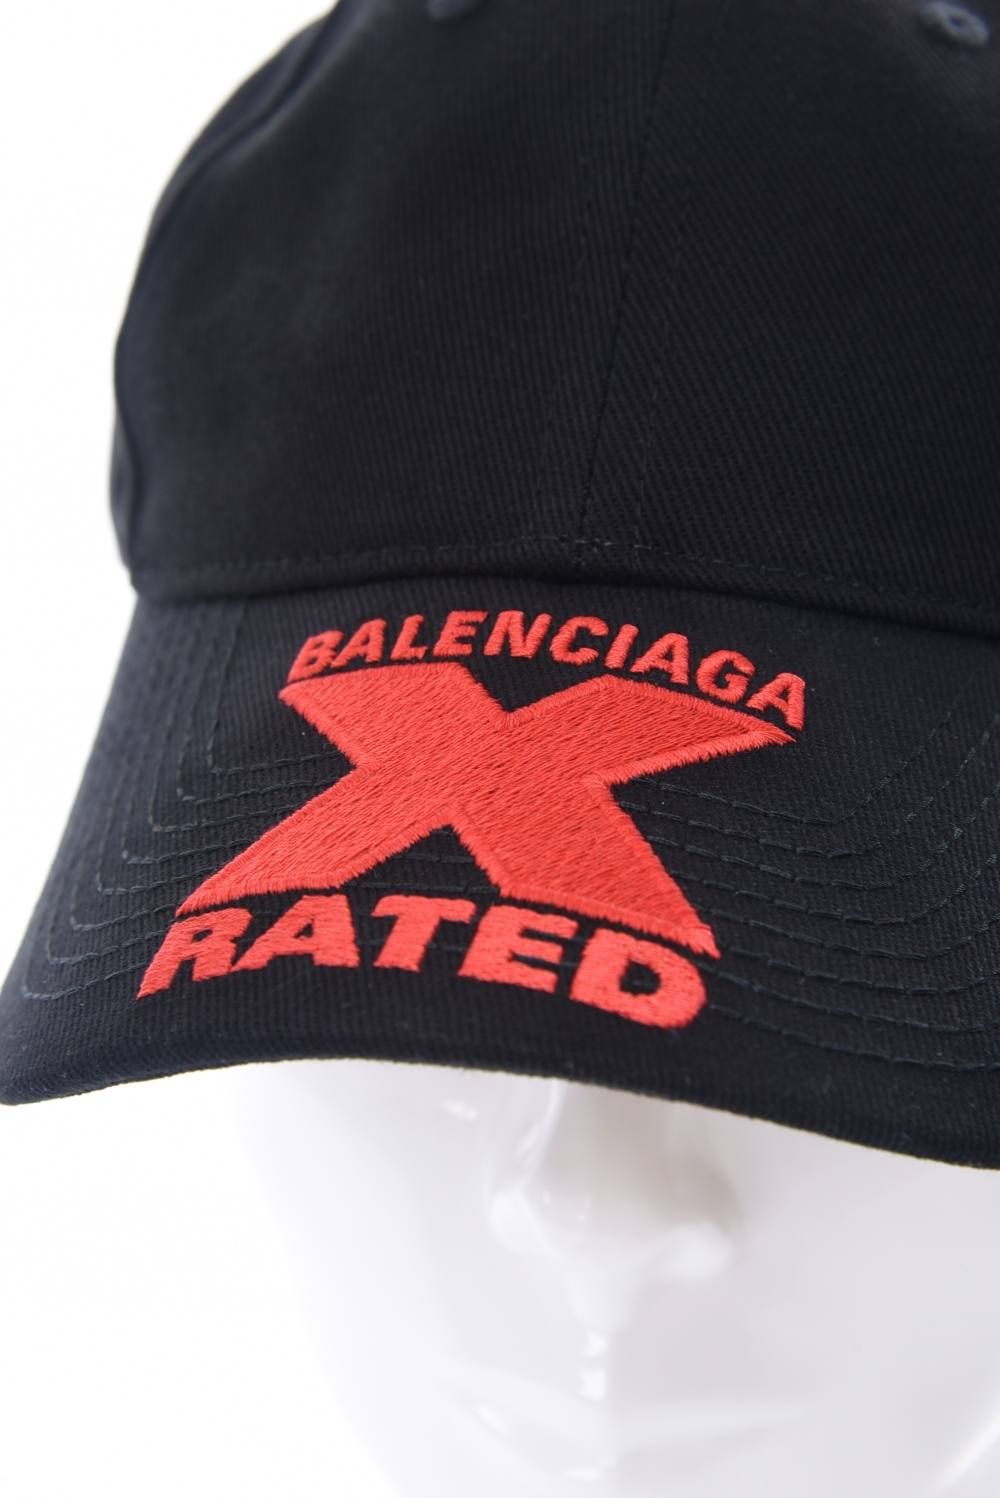 BALENCIAGA - HAT X-RATED CAP / コットンツイル ロゴキャップ 